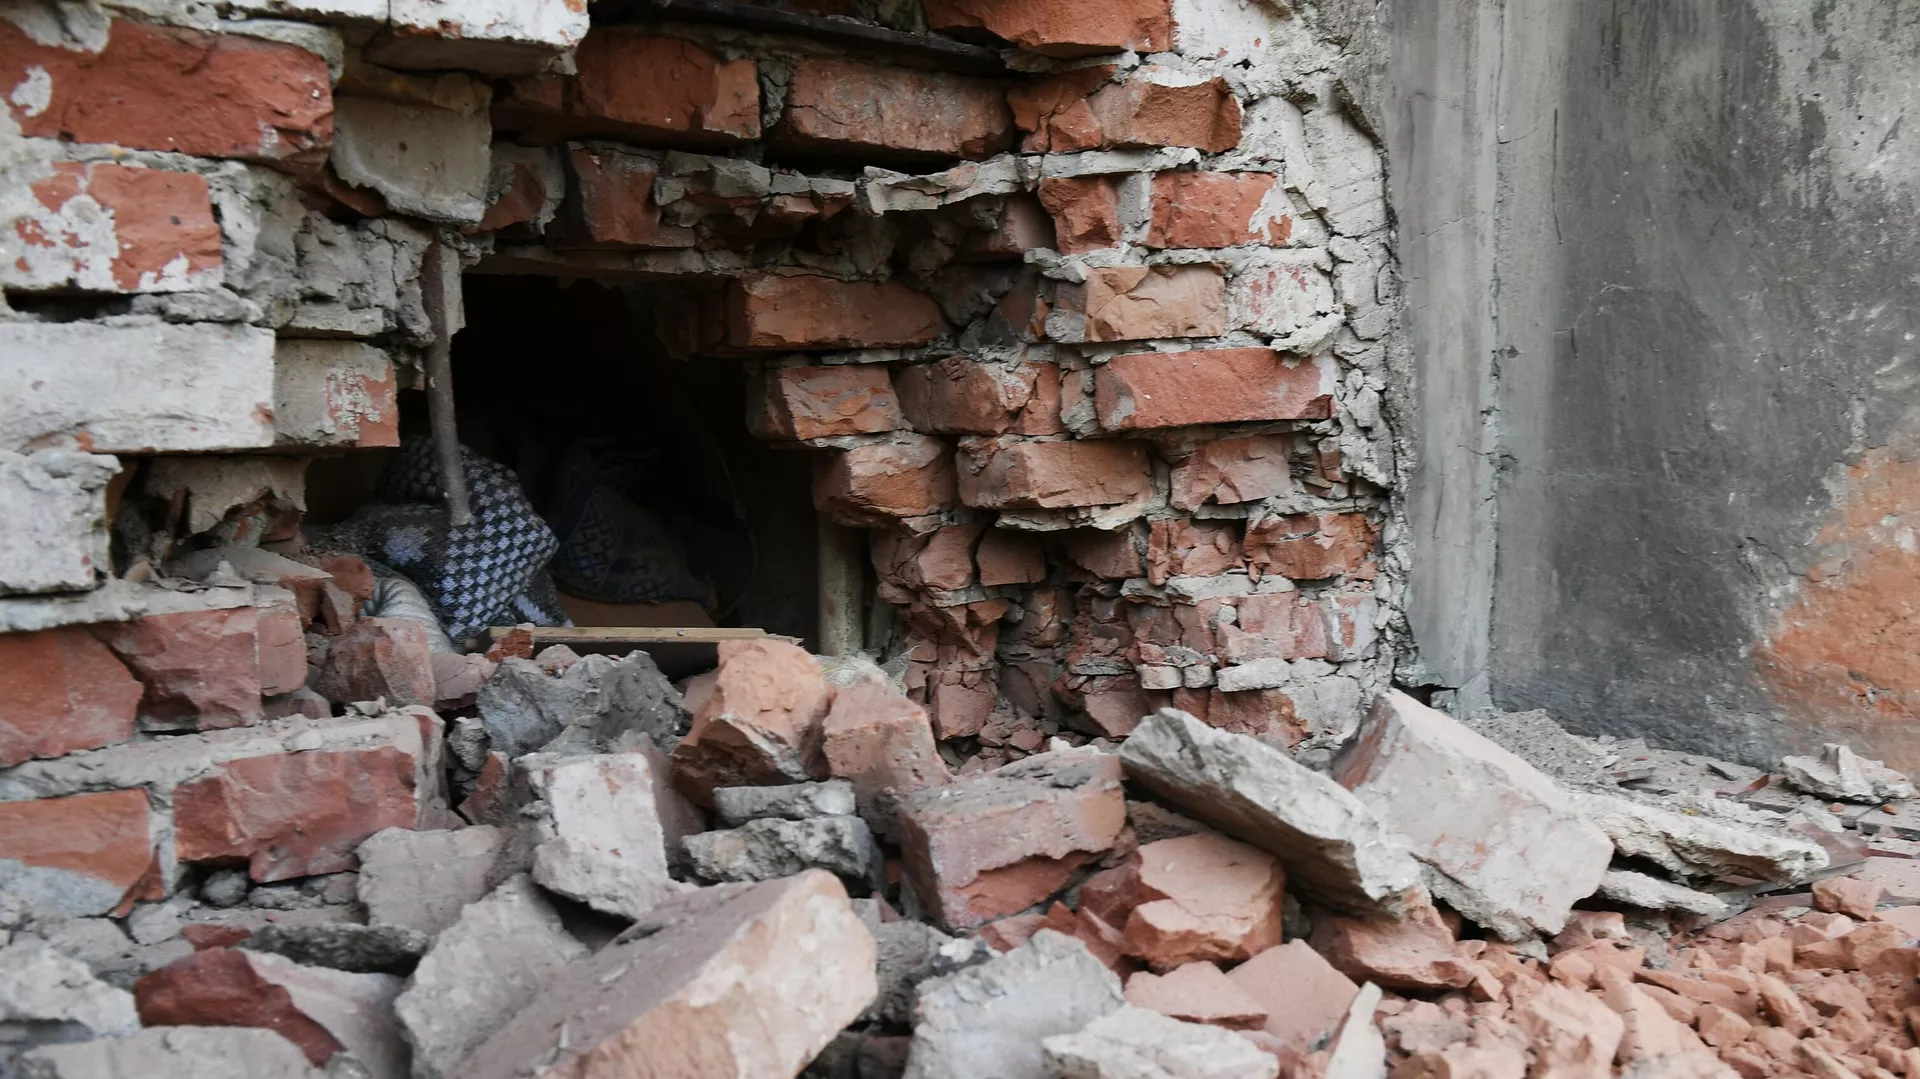  Ucrania esparce en Donetsk minas antipersona prohibidas internacionalmente